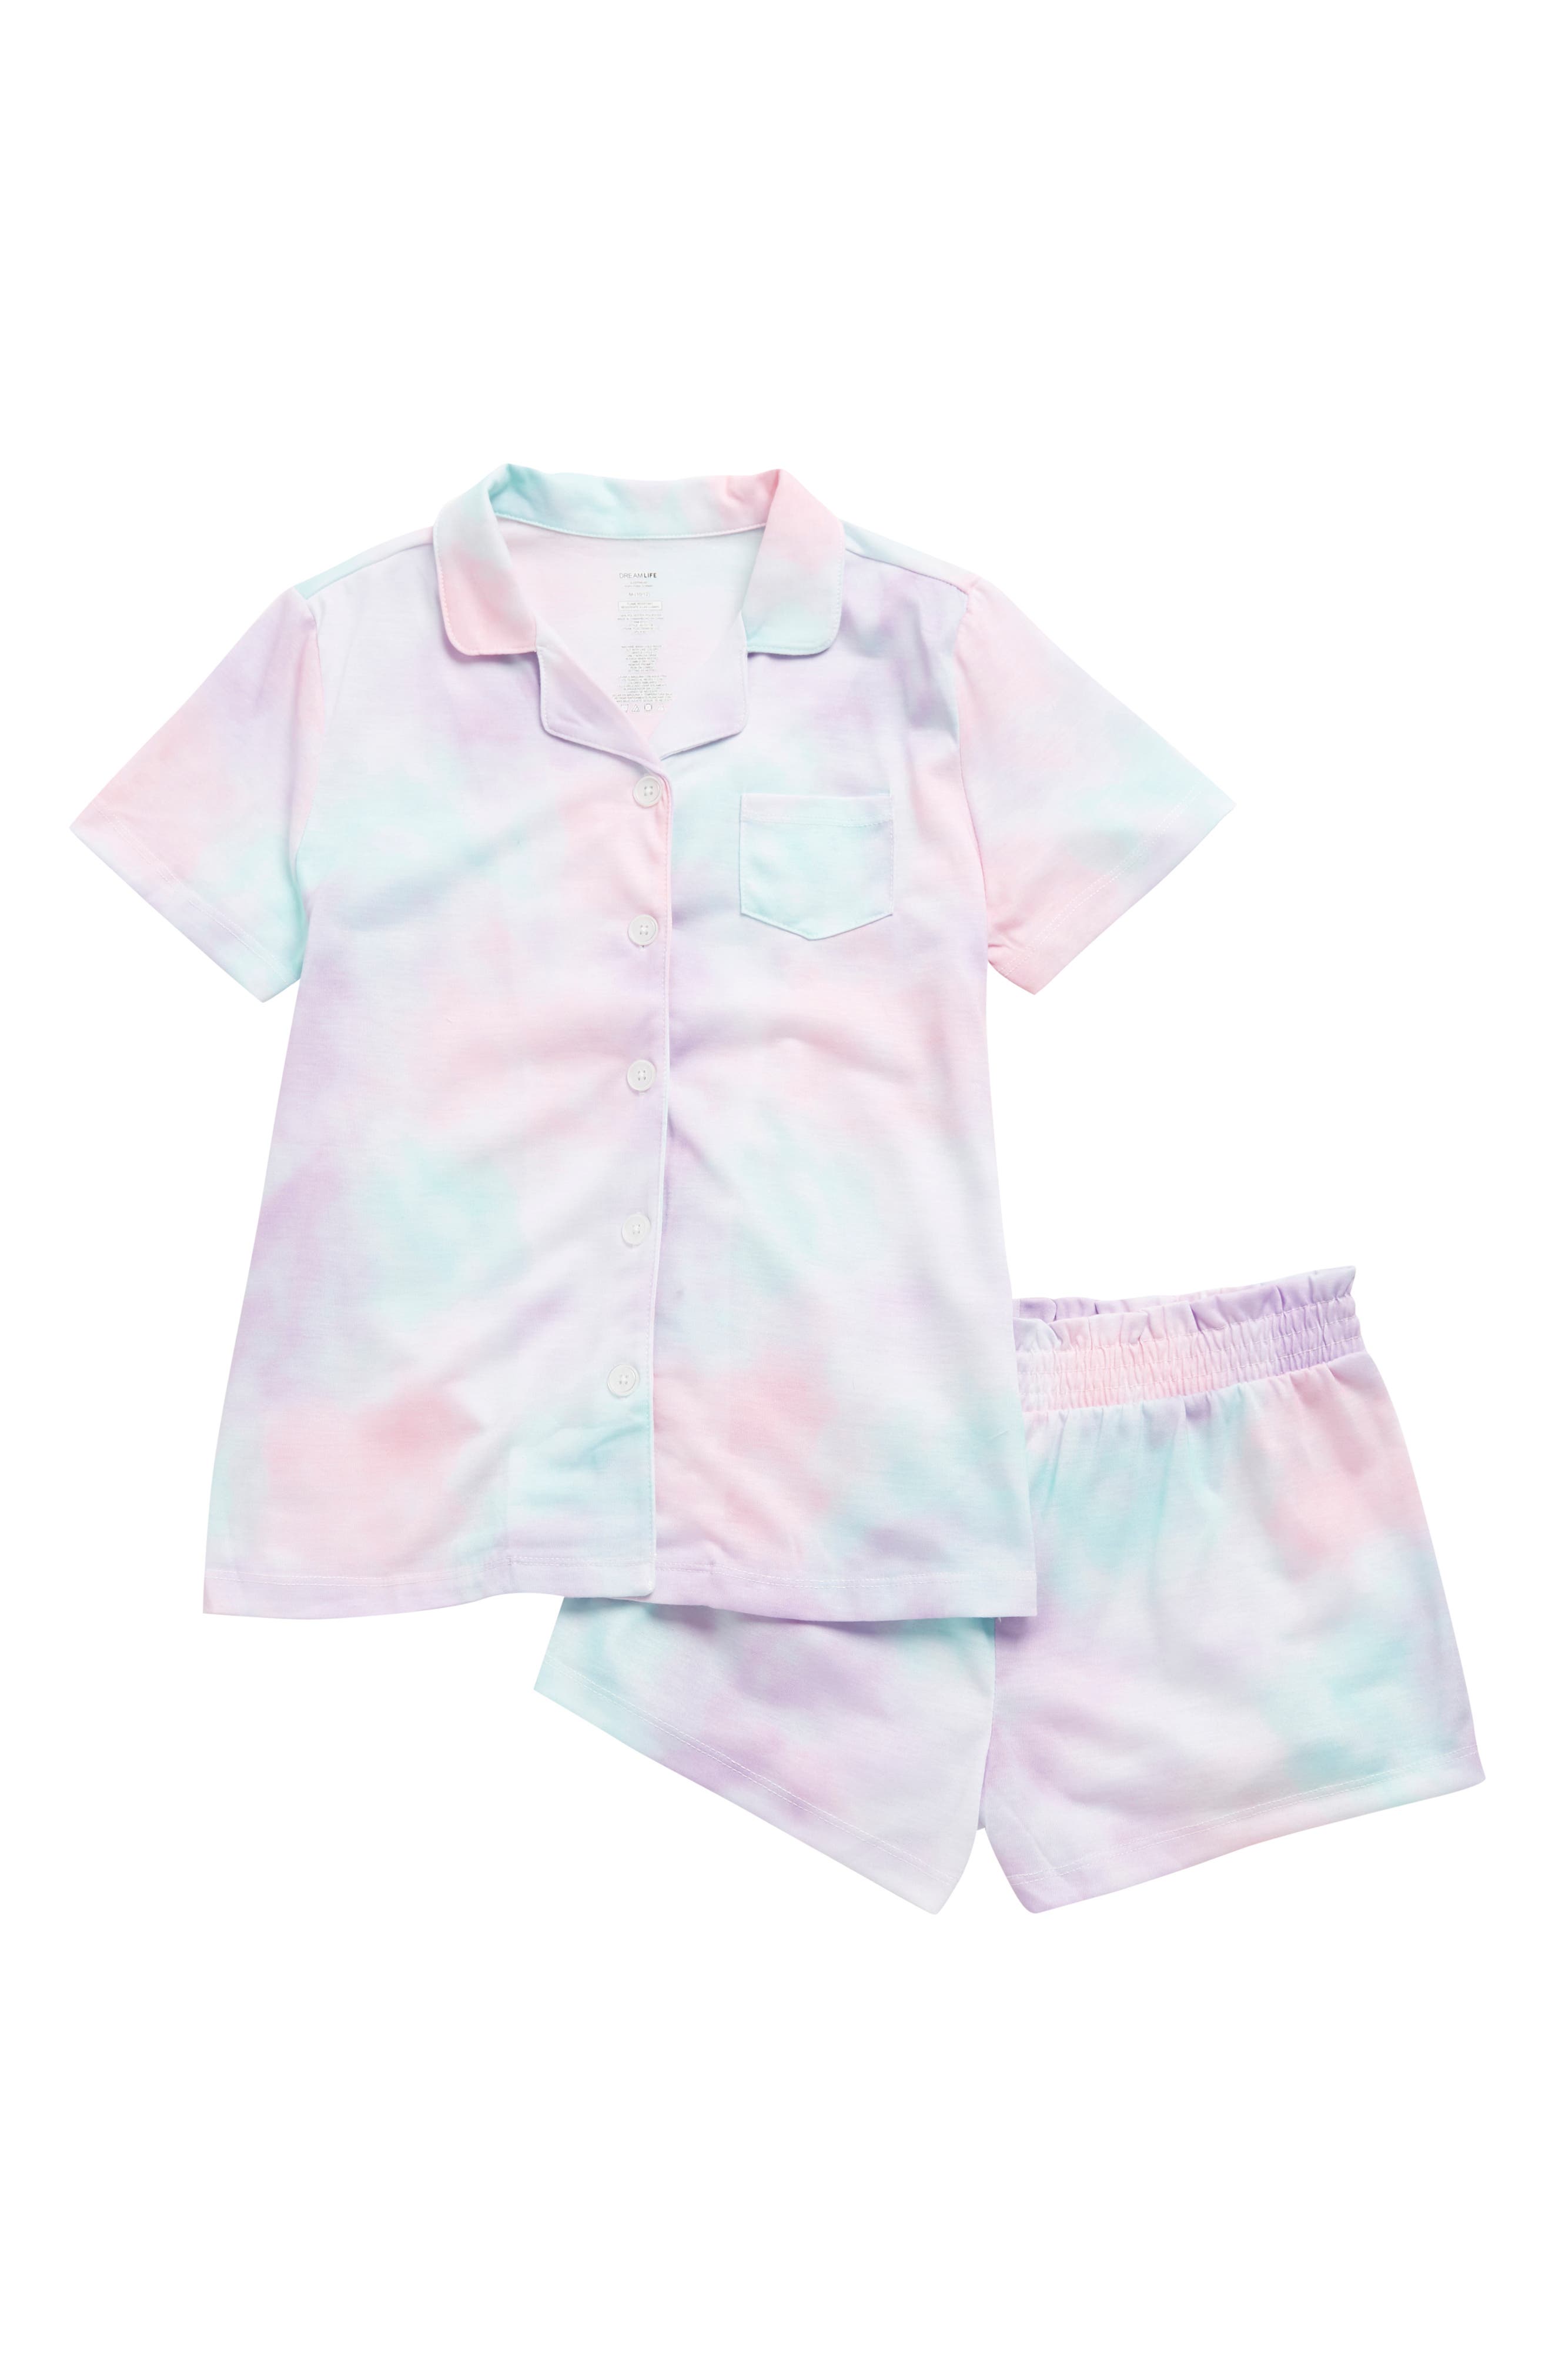 Kids' 2-Piece Coat & Shorts Set Blush by Us Angels